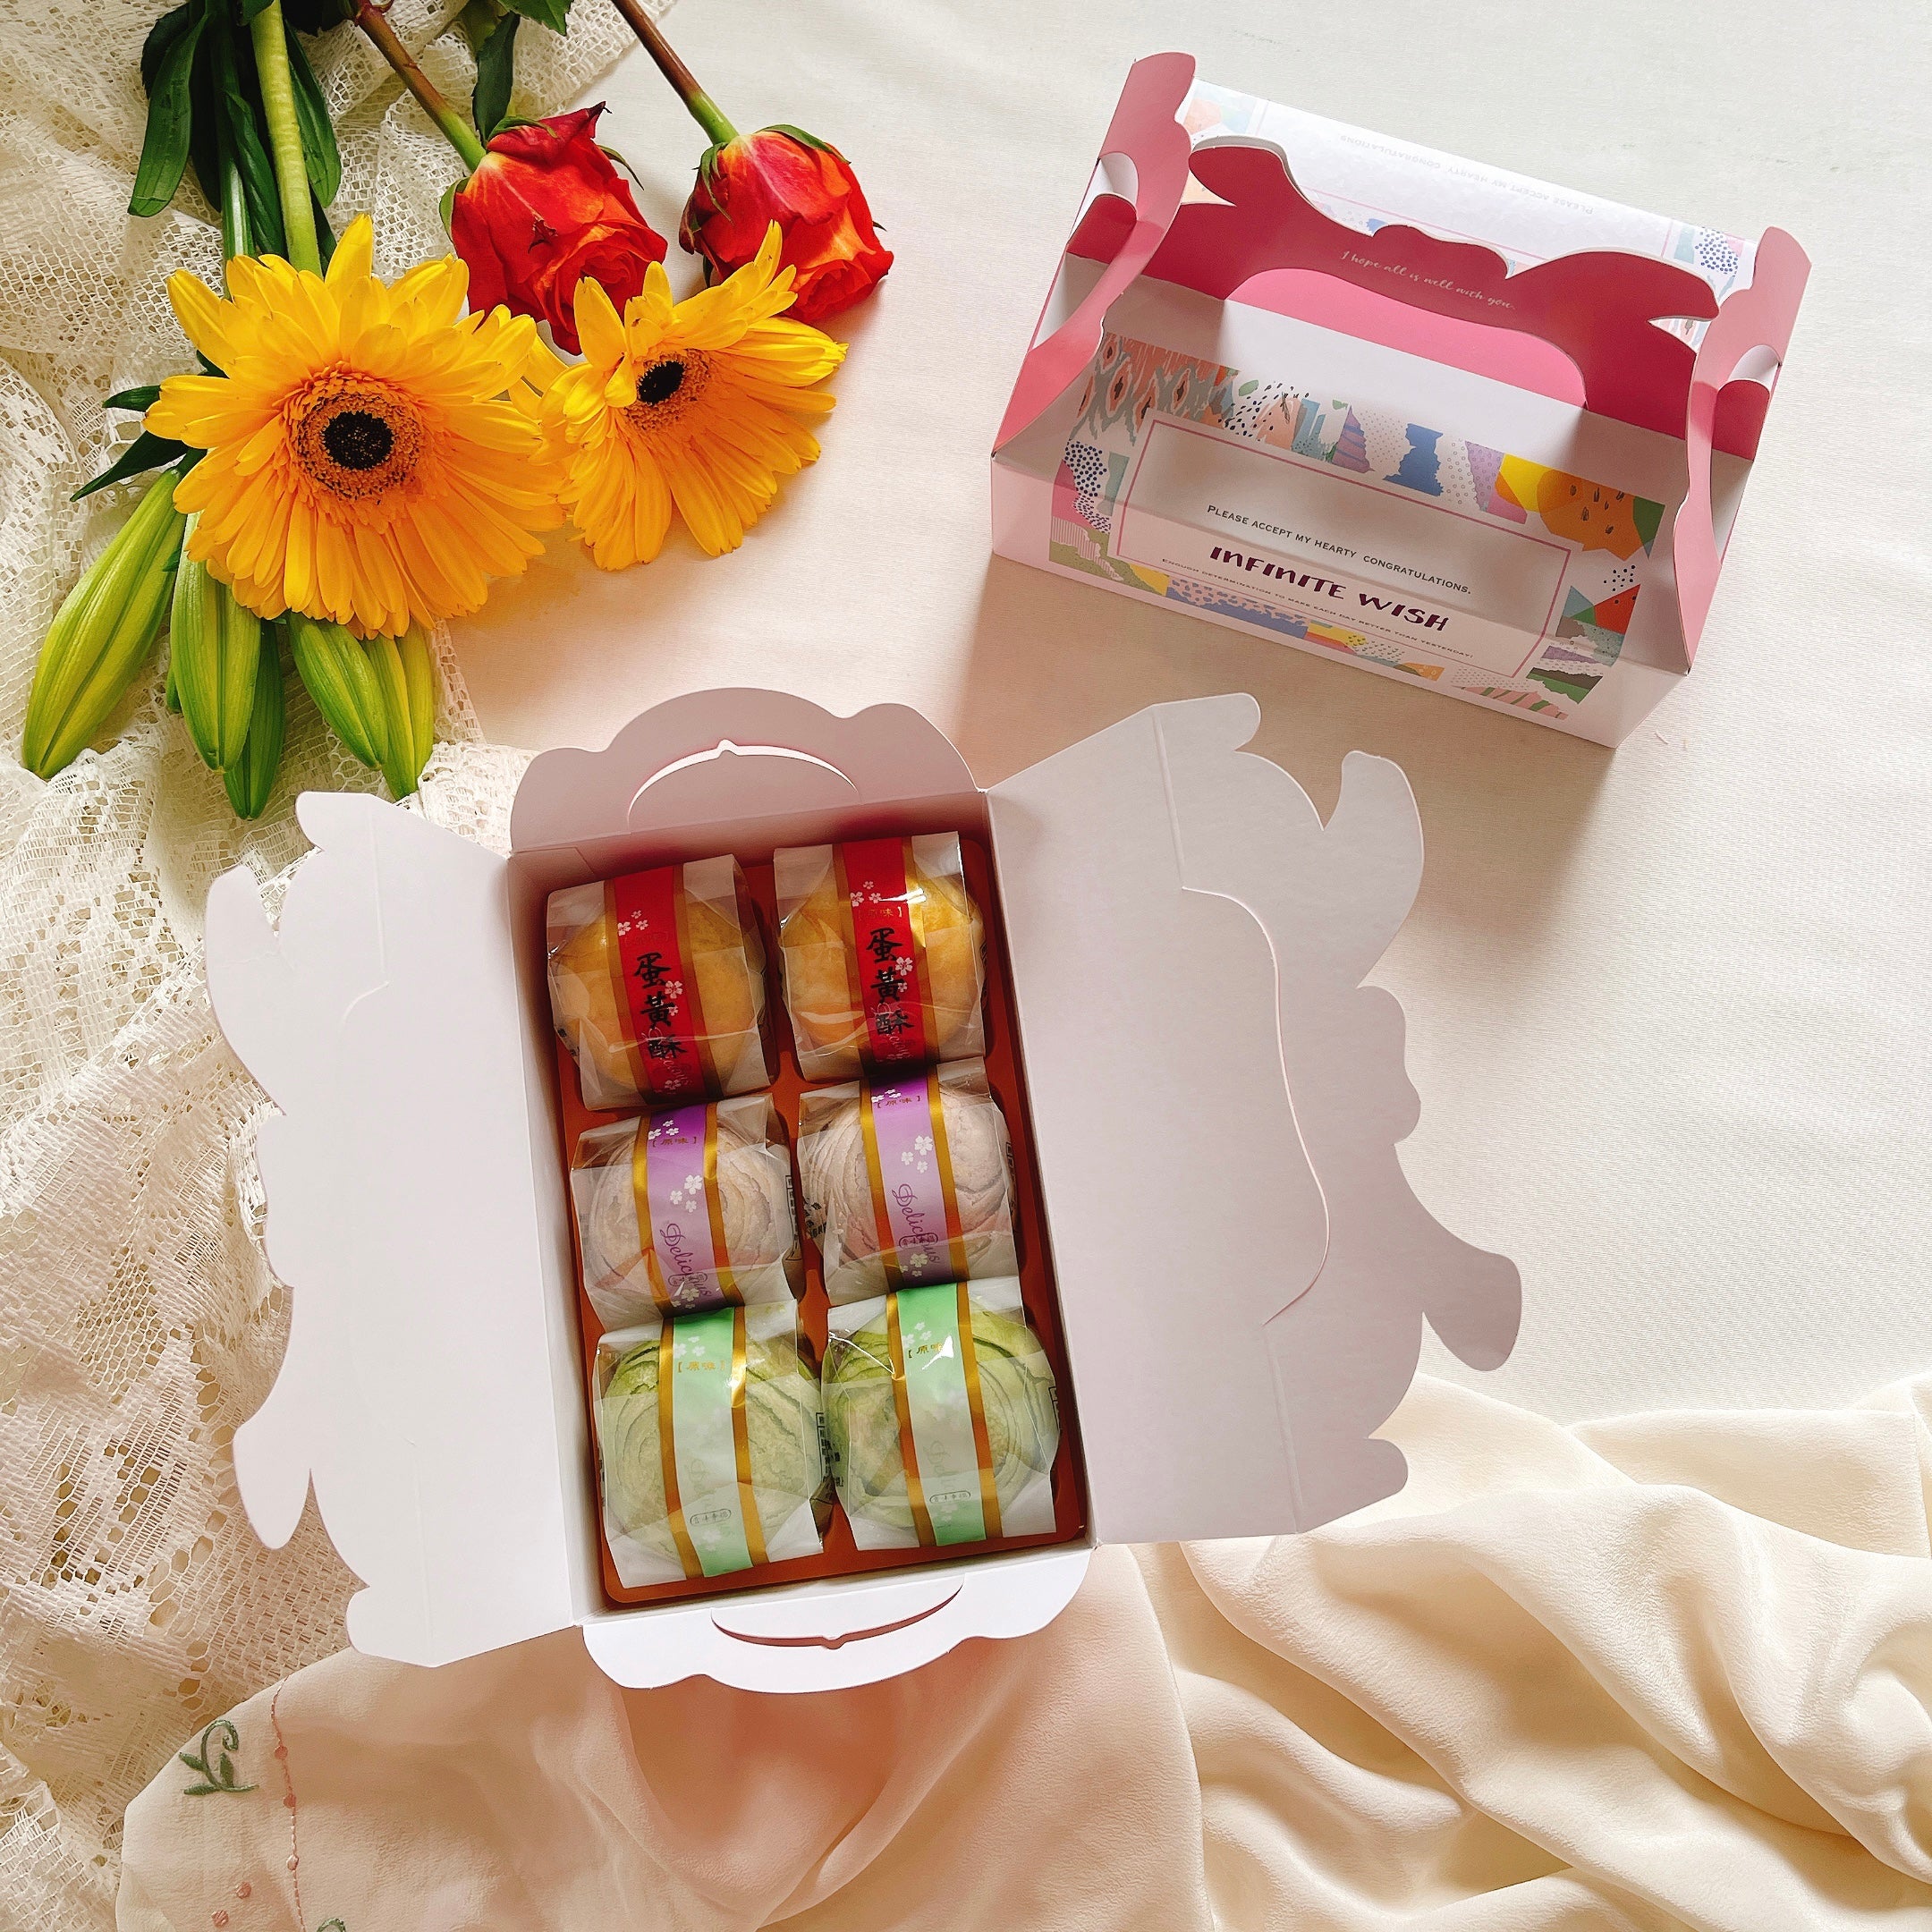 [C11]鐵觀音茶拿鐵麻糬酥&紅豆沙蛋黃酥&芋頭酥6入Tieguanyin Tea Latte & Mochi Pastry& Red Bean & Salted Duck Egg Yolk Pastry & Taro Pastry 6 in Gift Box